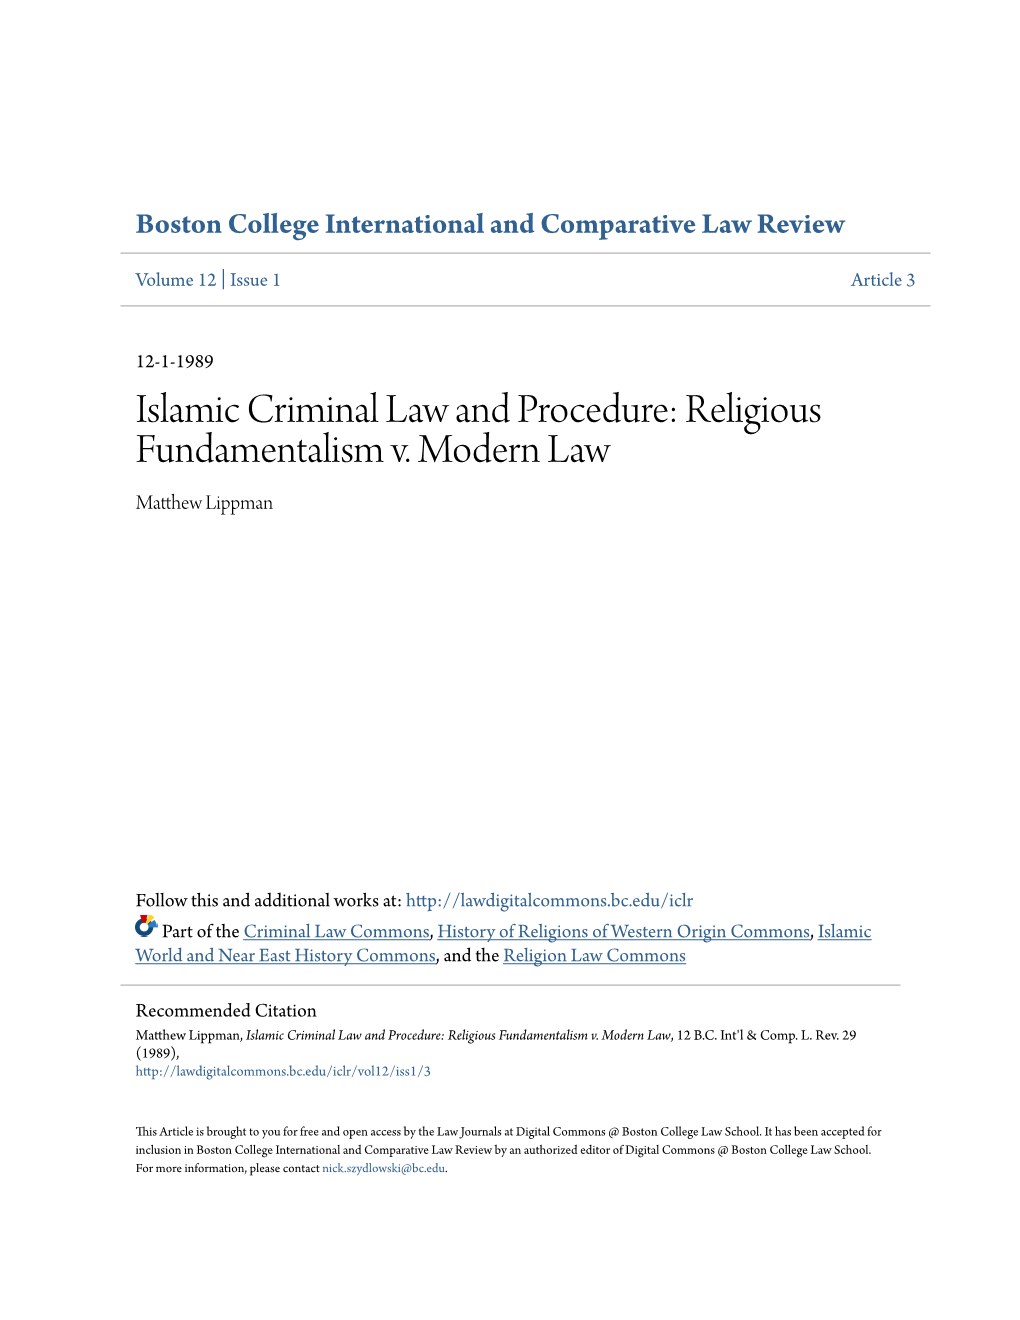 Islamic Criminal Law and Procedure: Religious Fundamentalism V